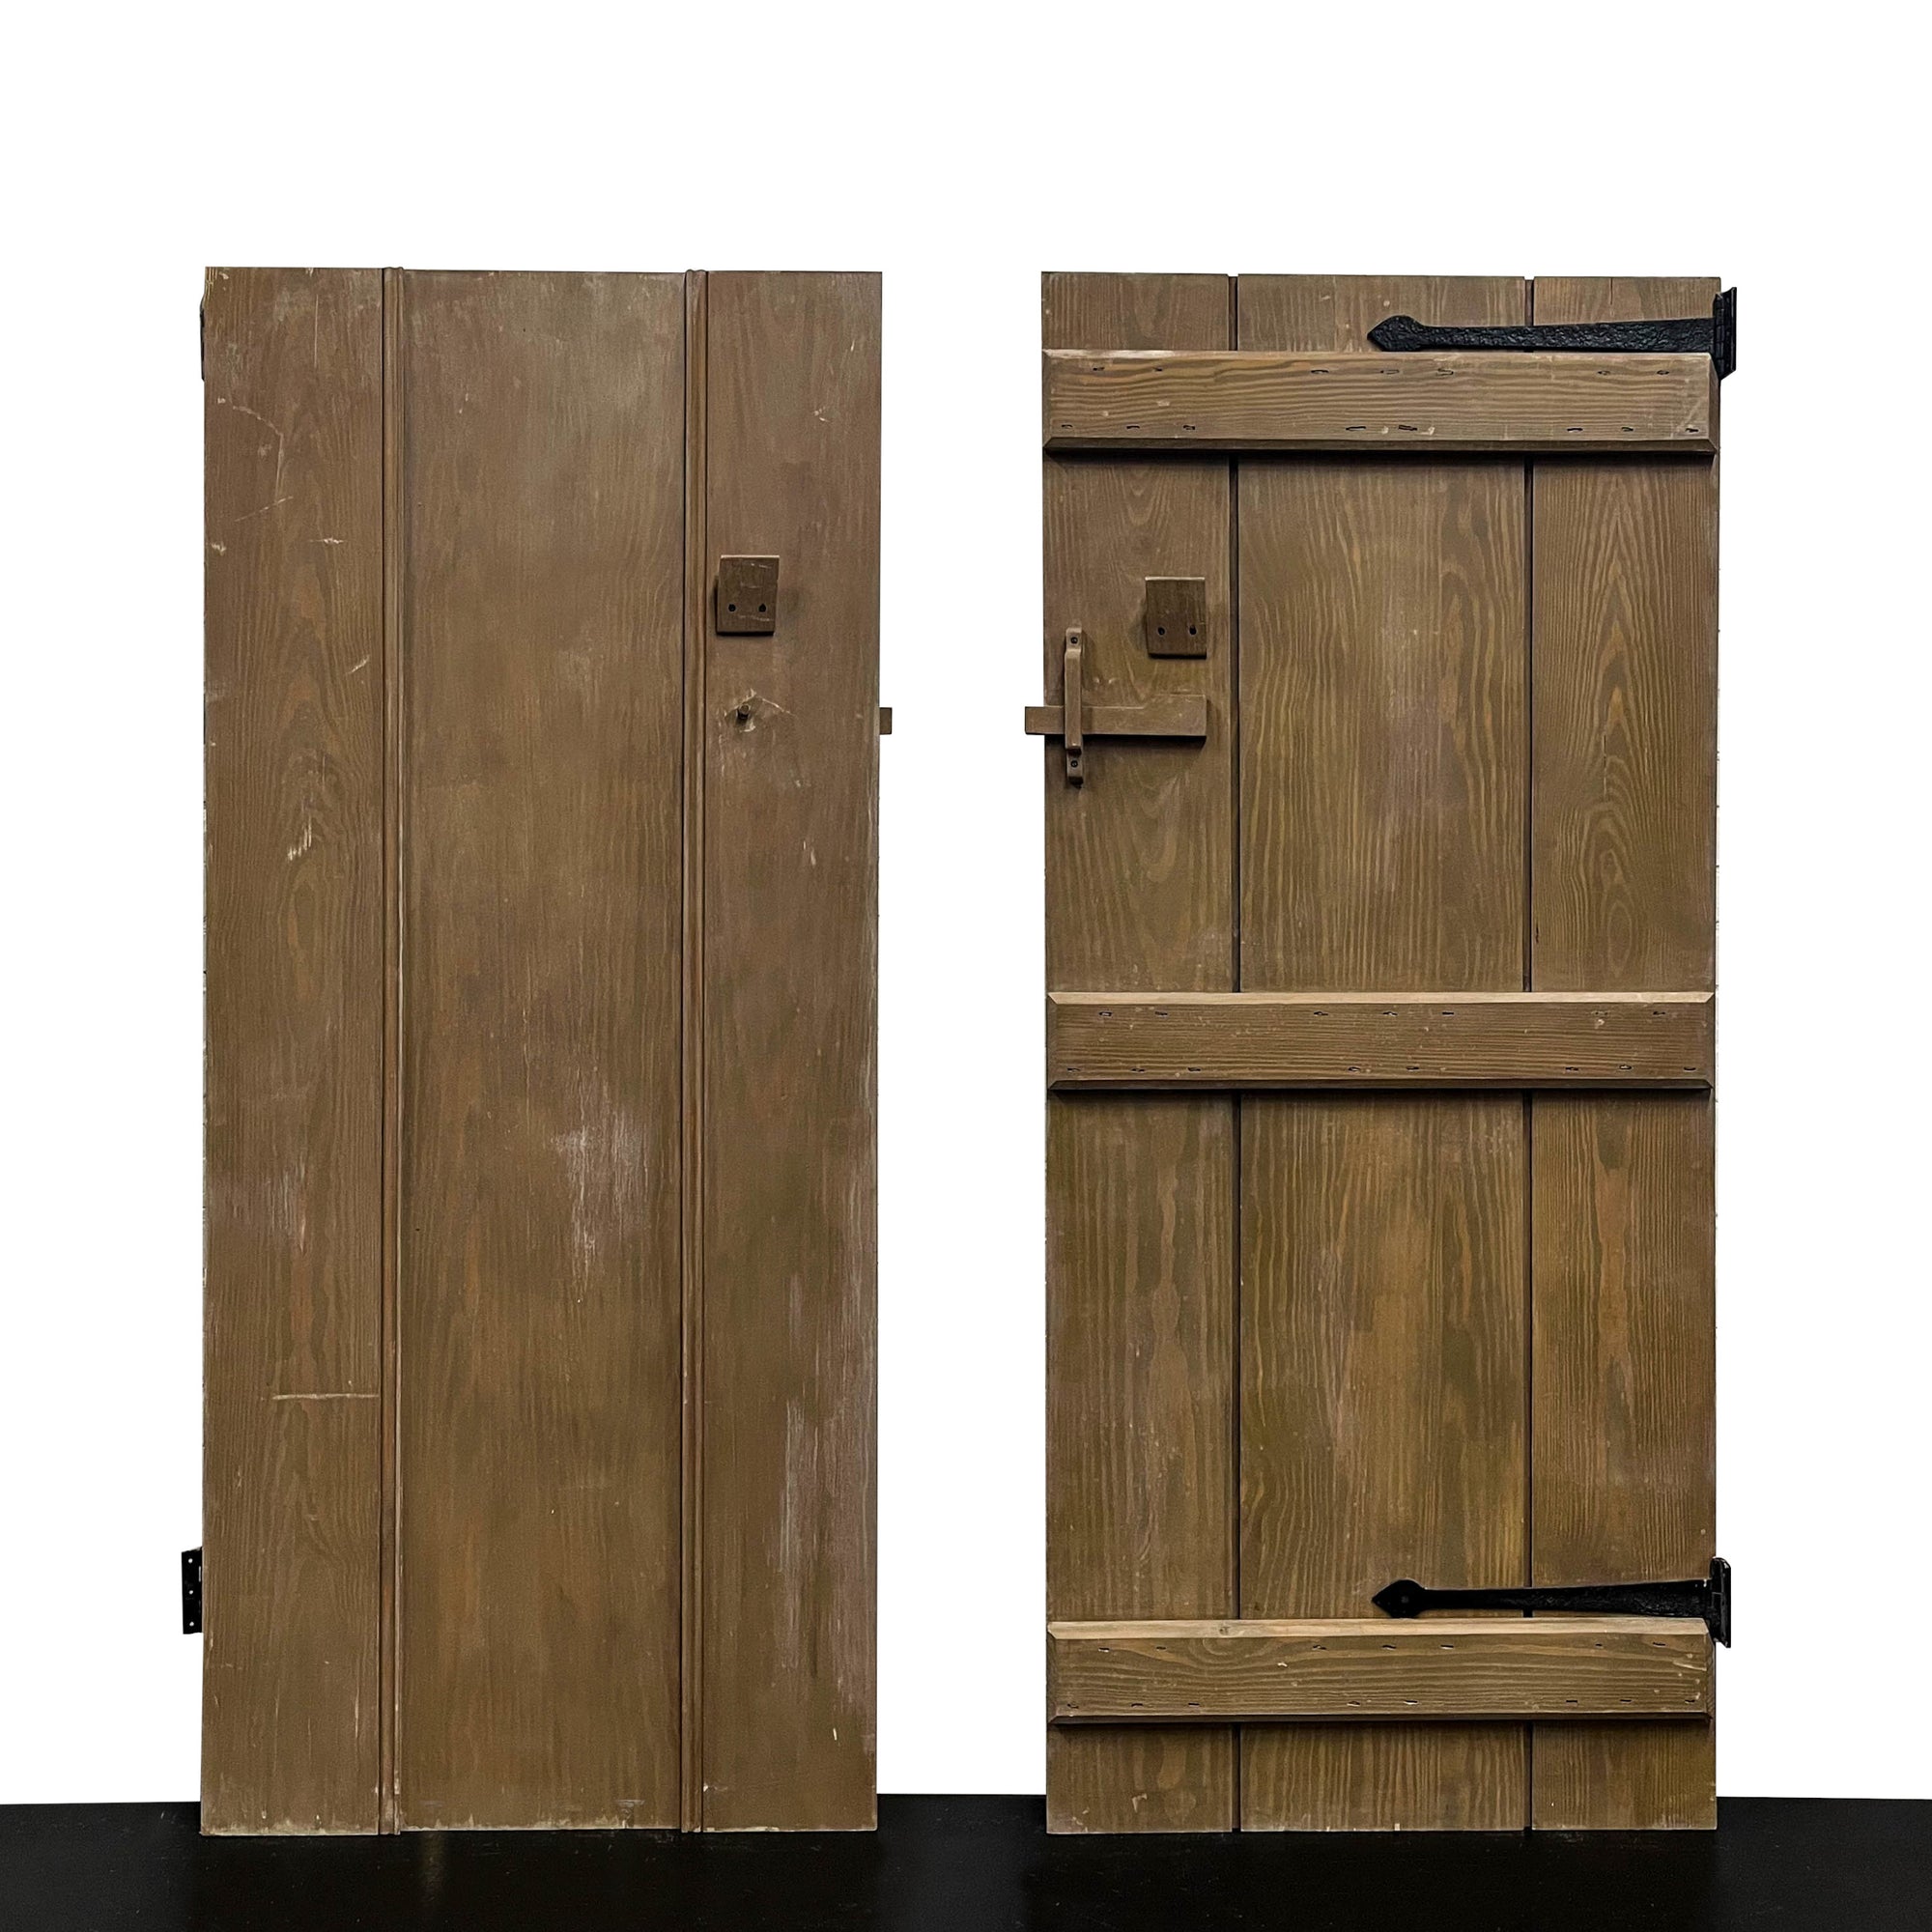 Antique Victorian Pine Latch Door - 193.5cm x 83.5cm | The Architectural Forum